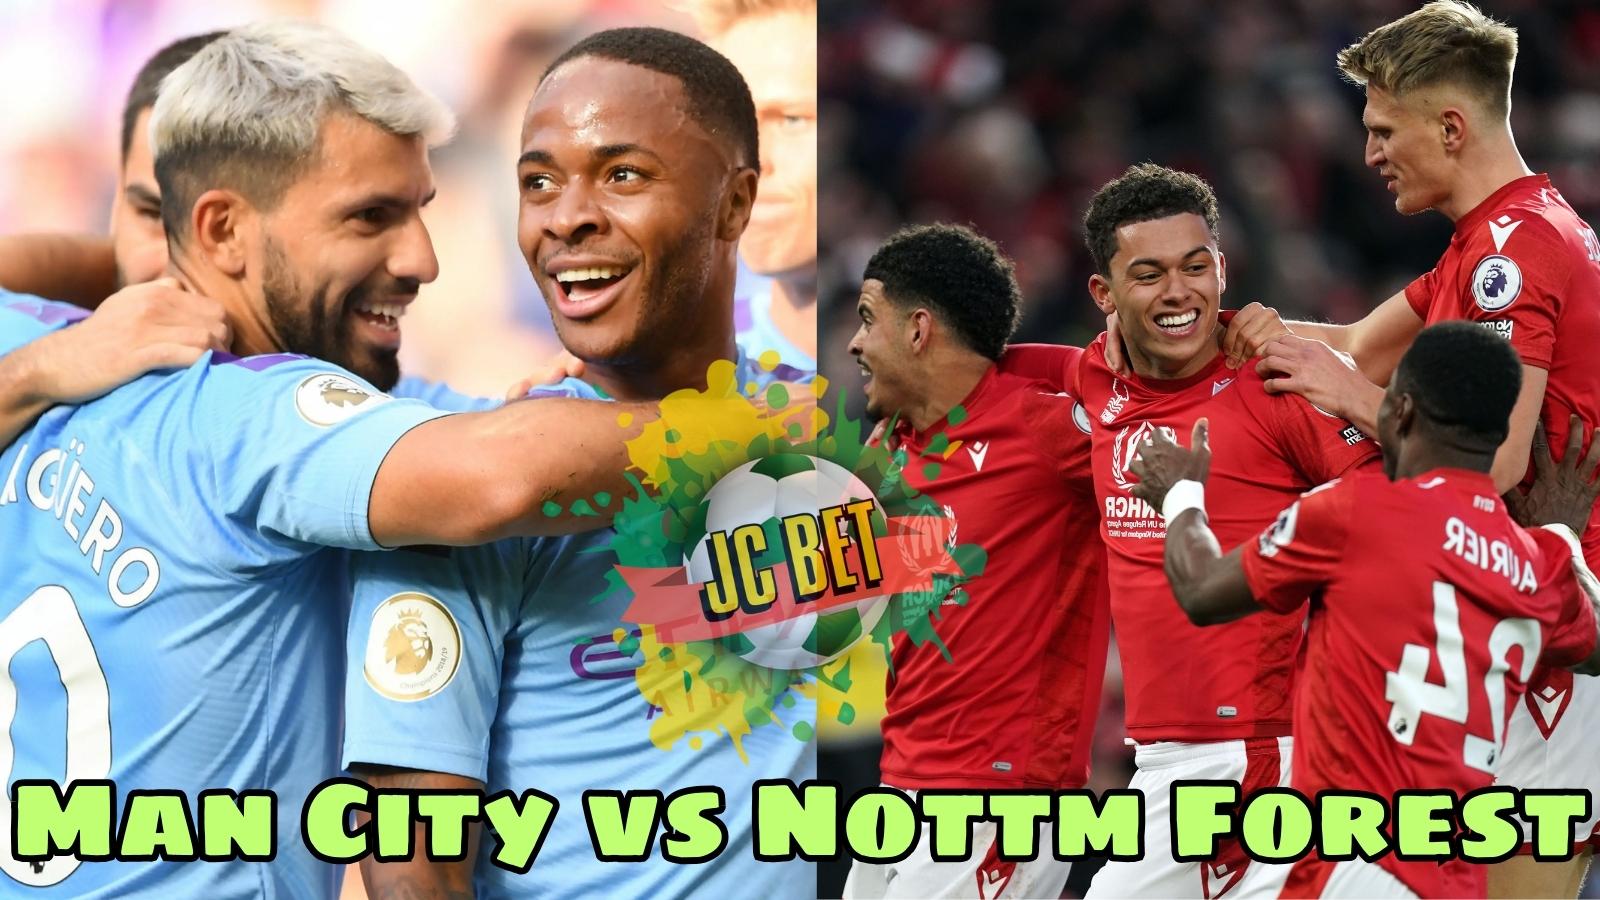 Man City vs Nottm Forest